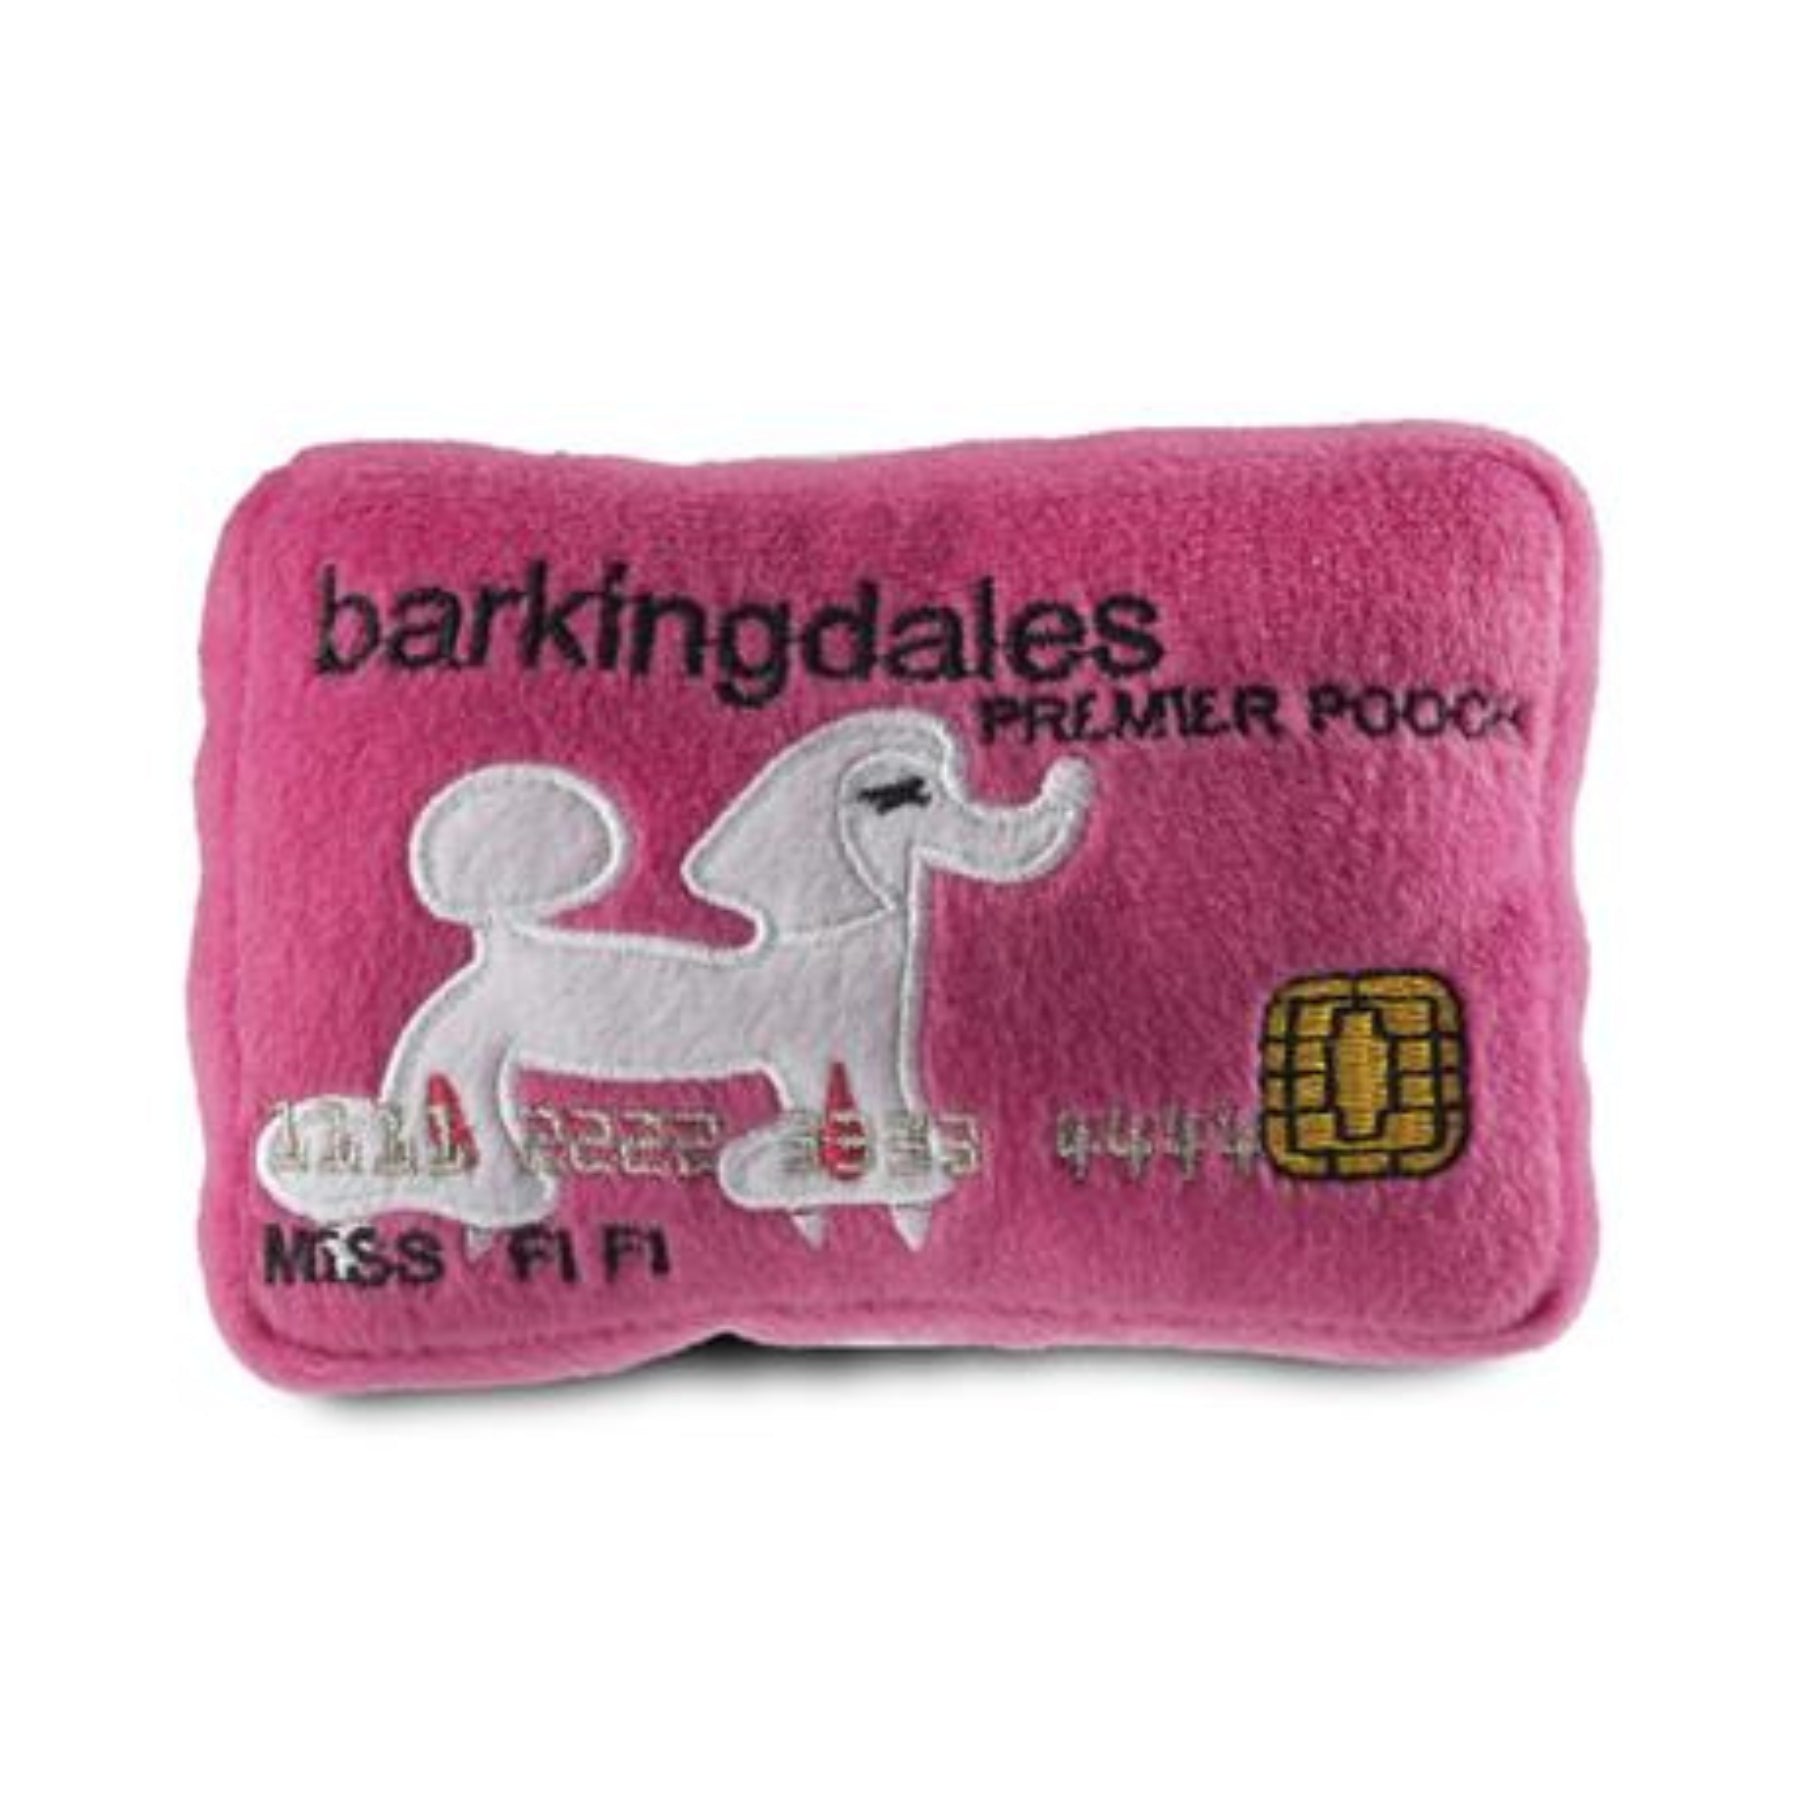 Barkingdales Credit Card Plush Toy - Pooch Luxury